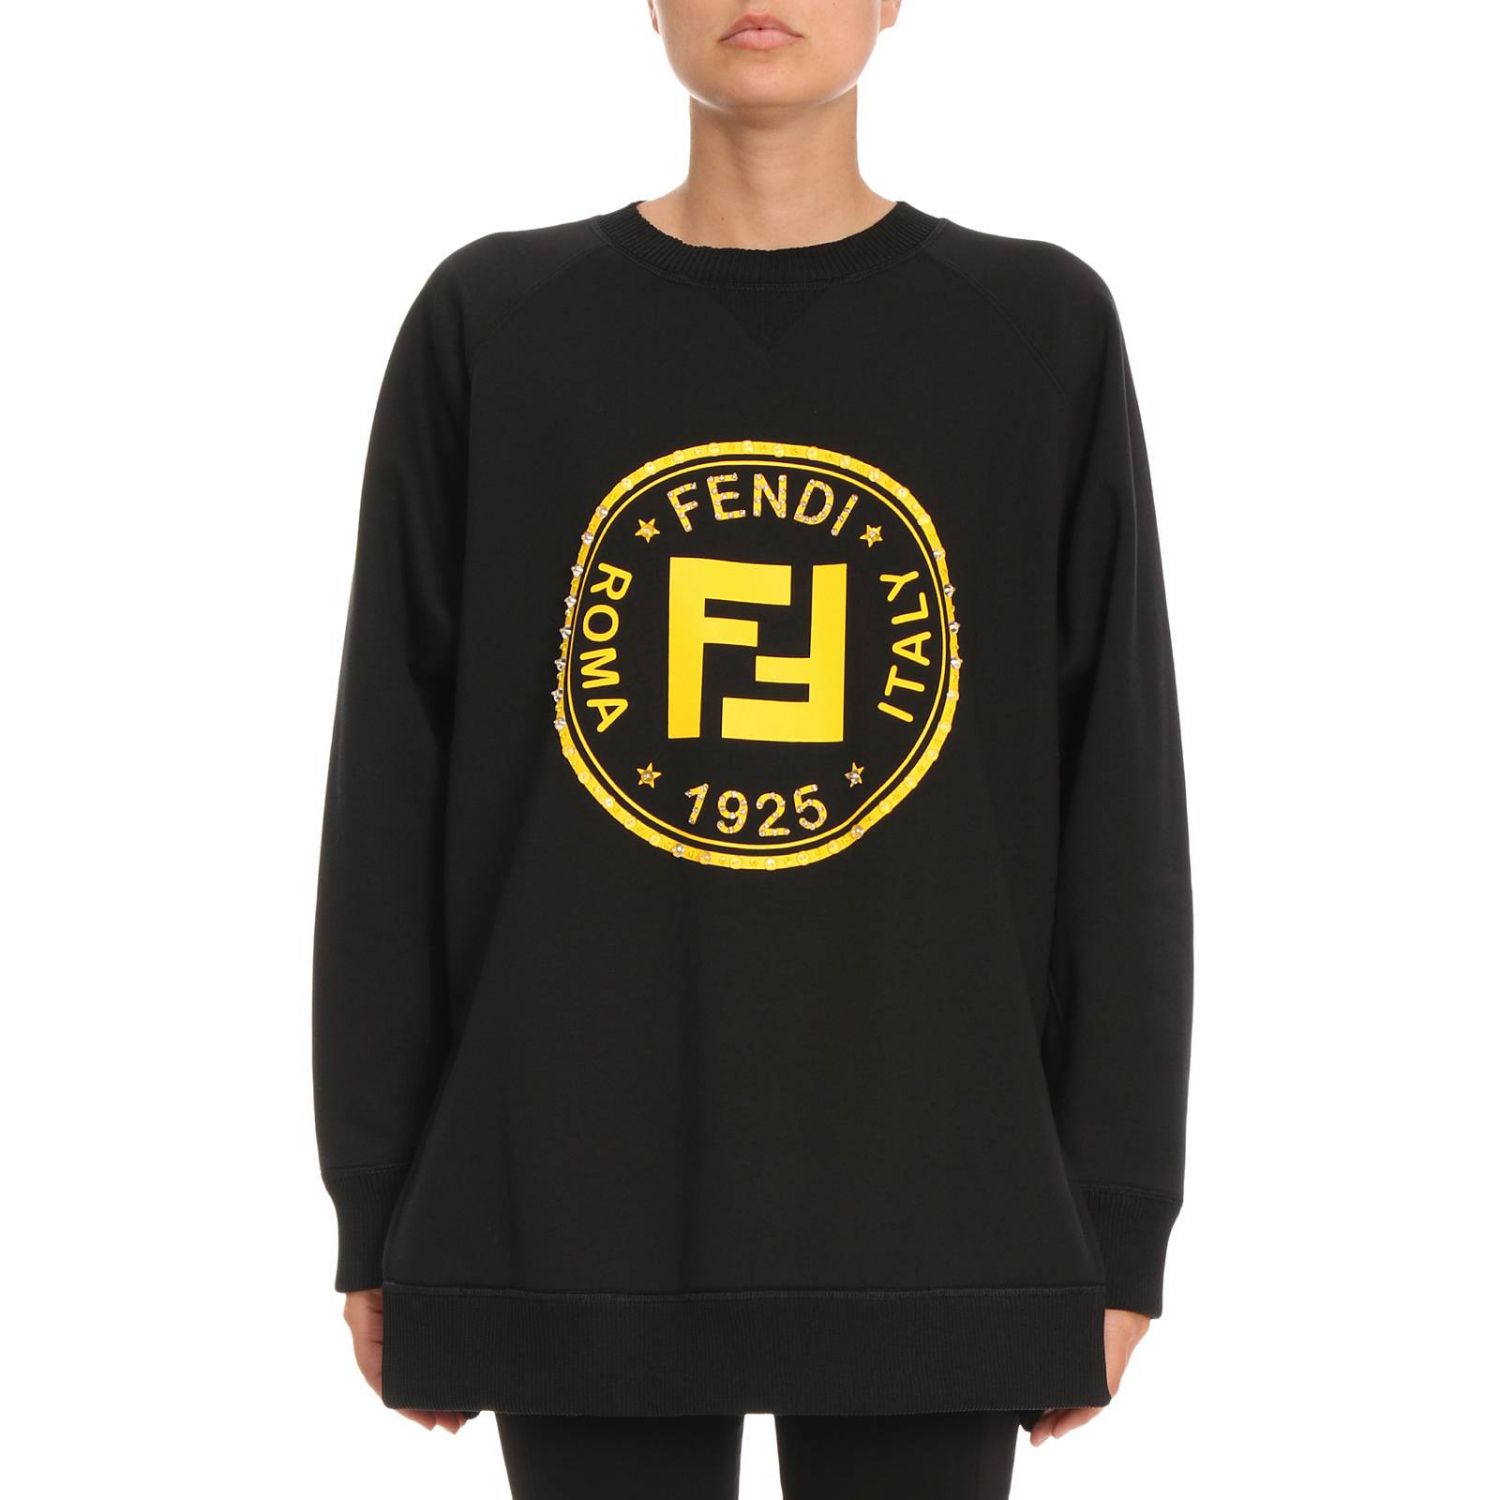 Sweater women Fendi | Sweatshirt Fendi Women Black | Sweatshirt Fendi ...